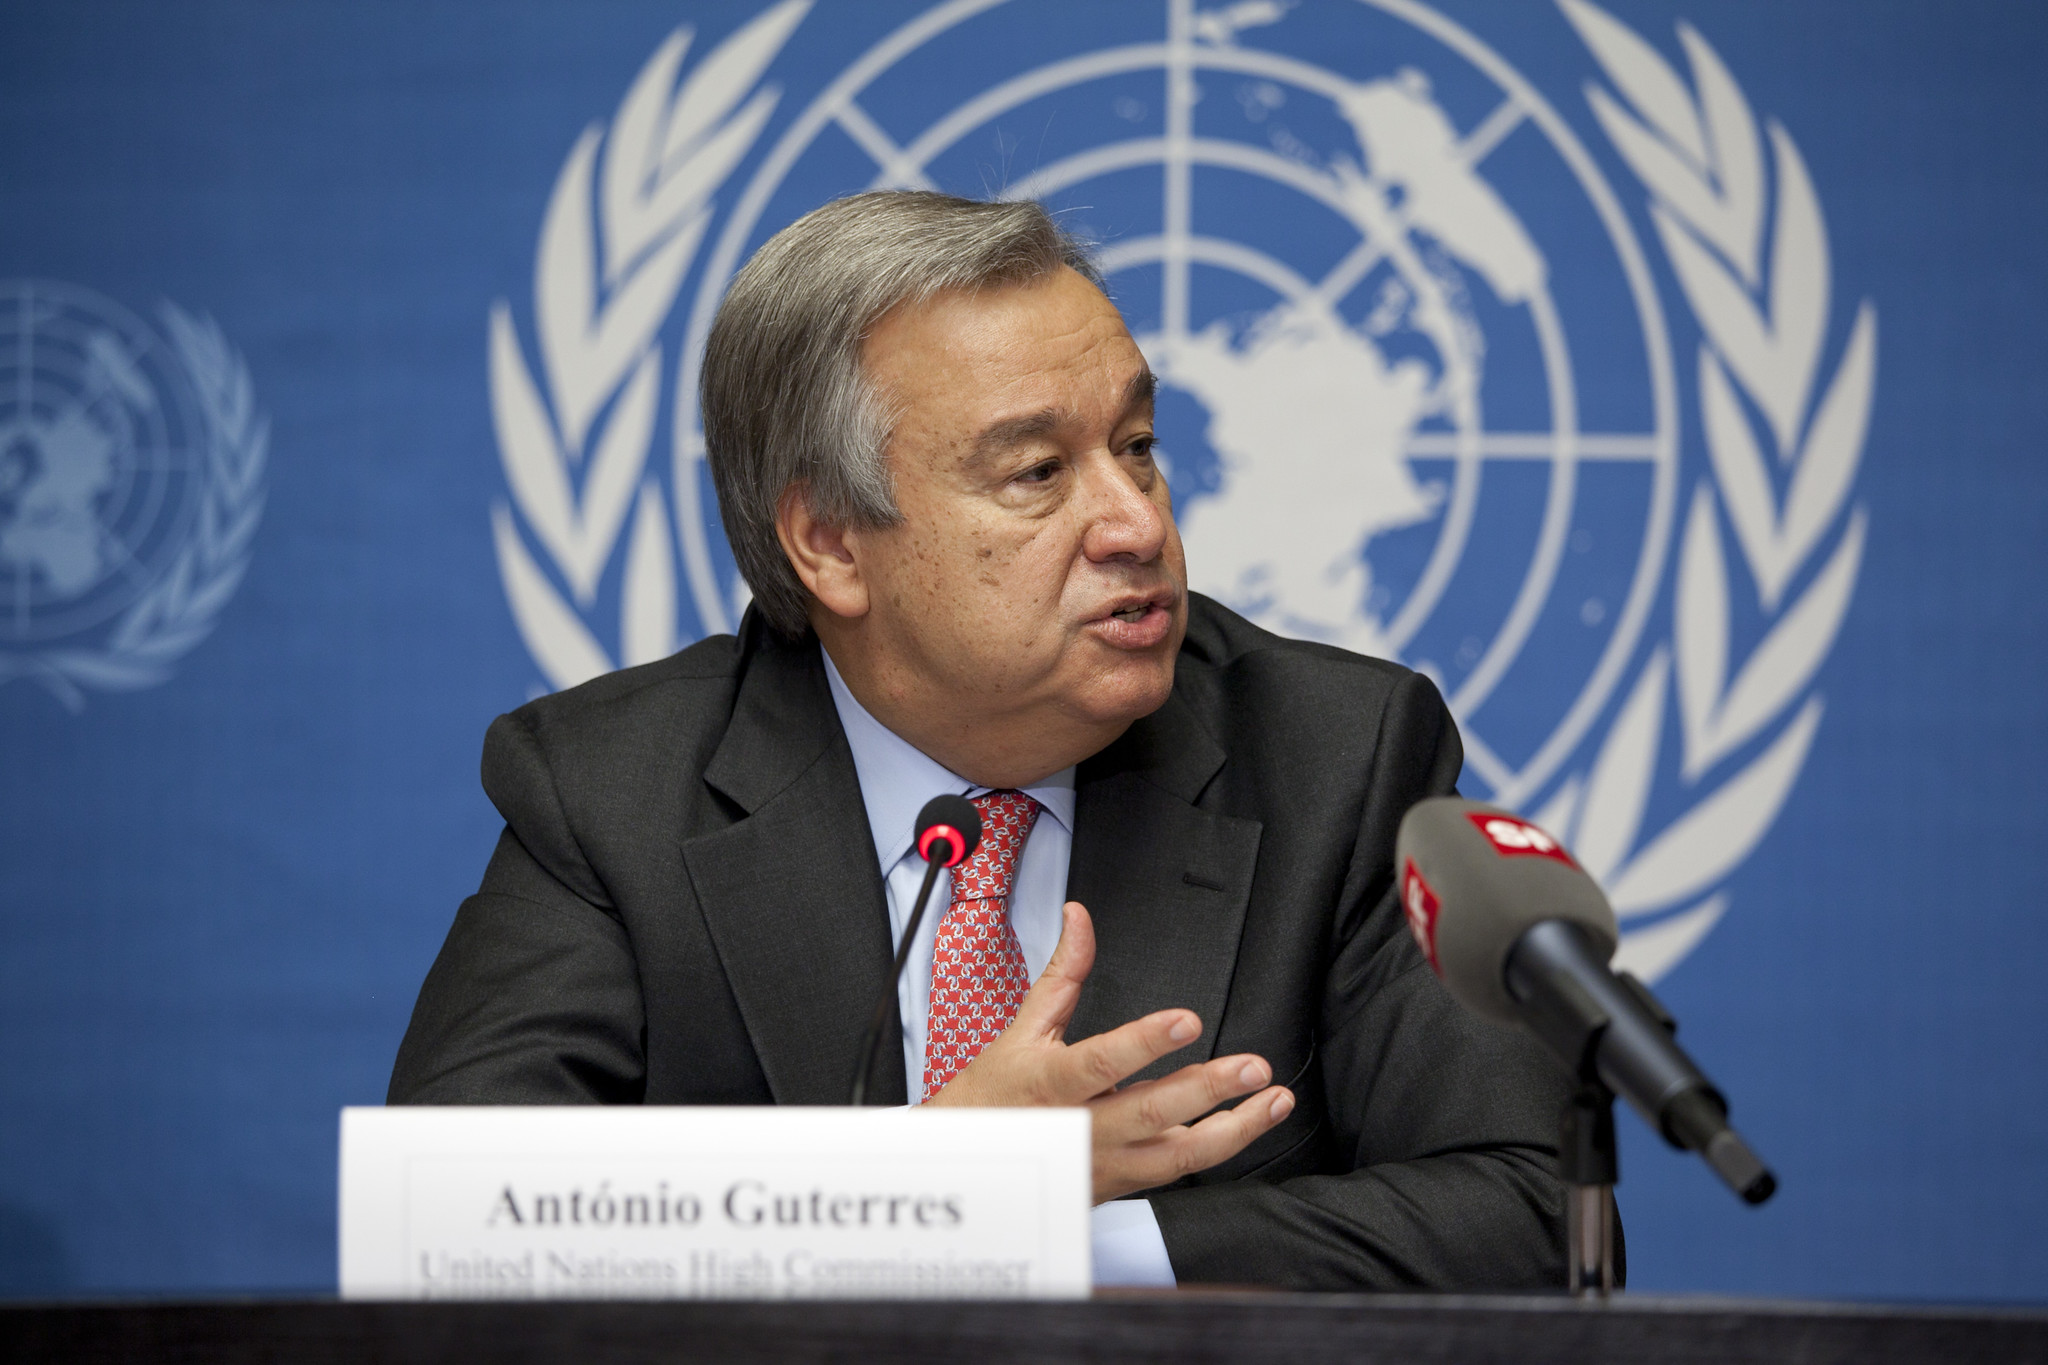 “Verdadeiro problema” do envio de ajuda humanitária para Gaza é a “forma como Israel conduz a ofensiva”, afirma António Guterres